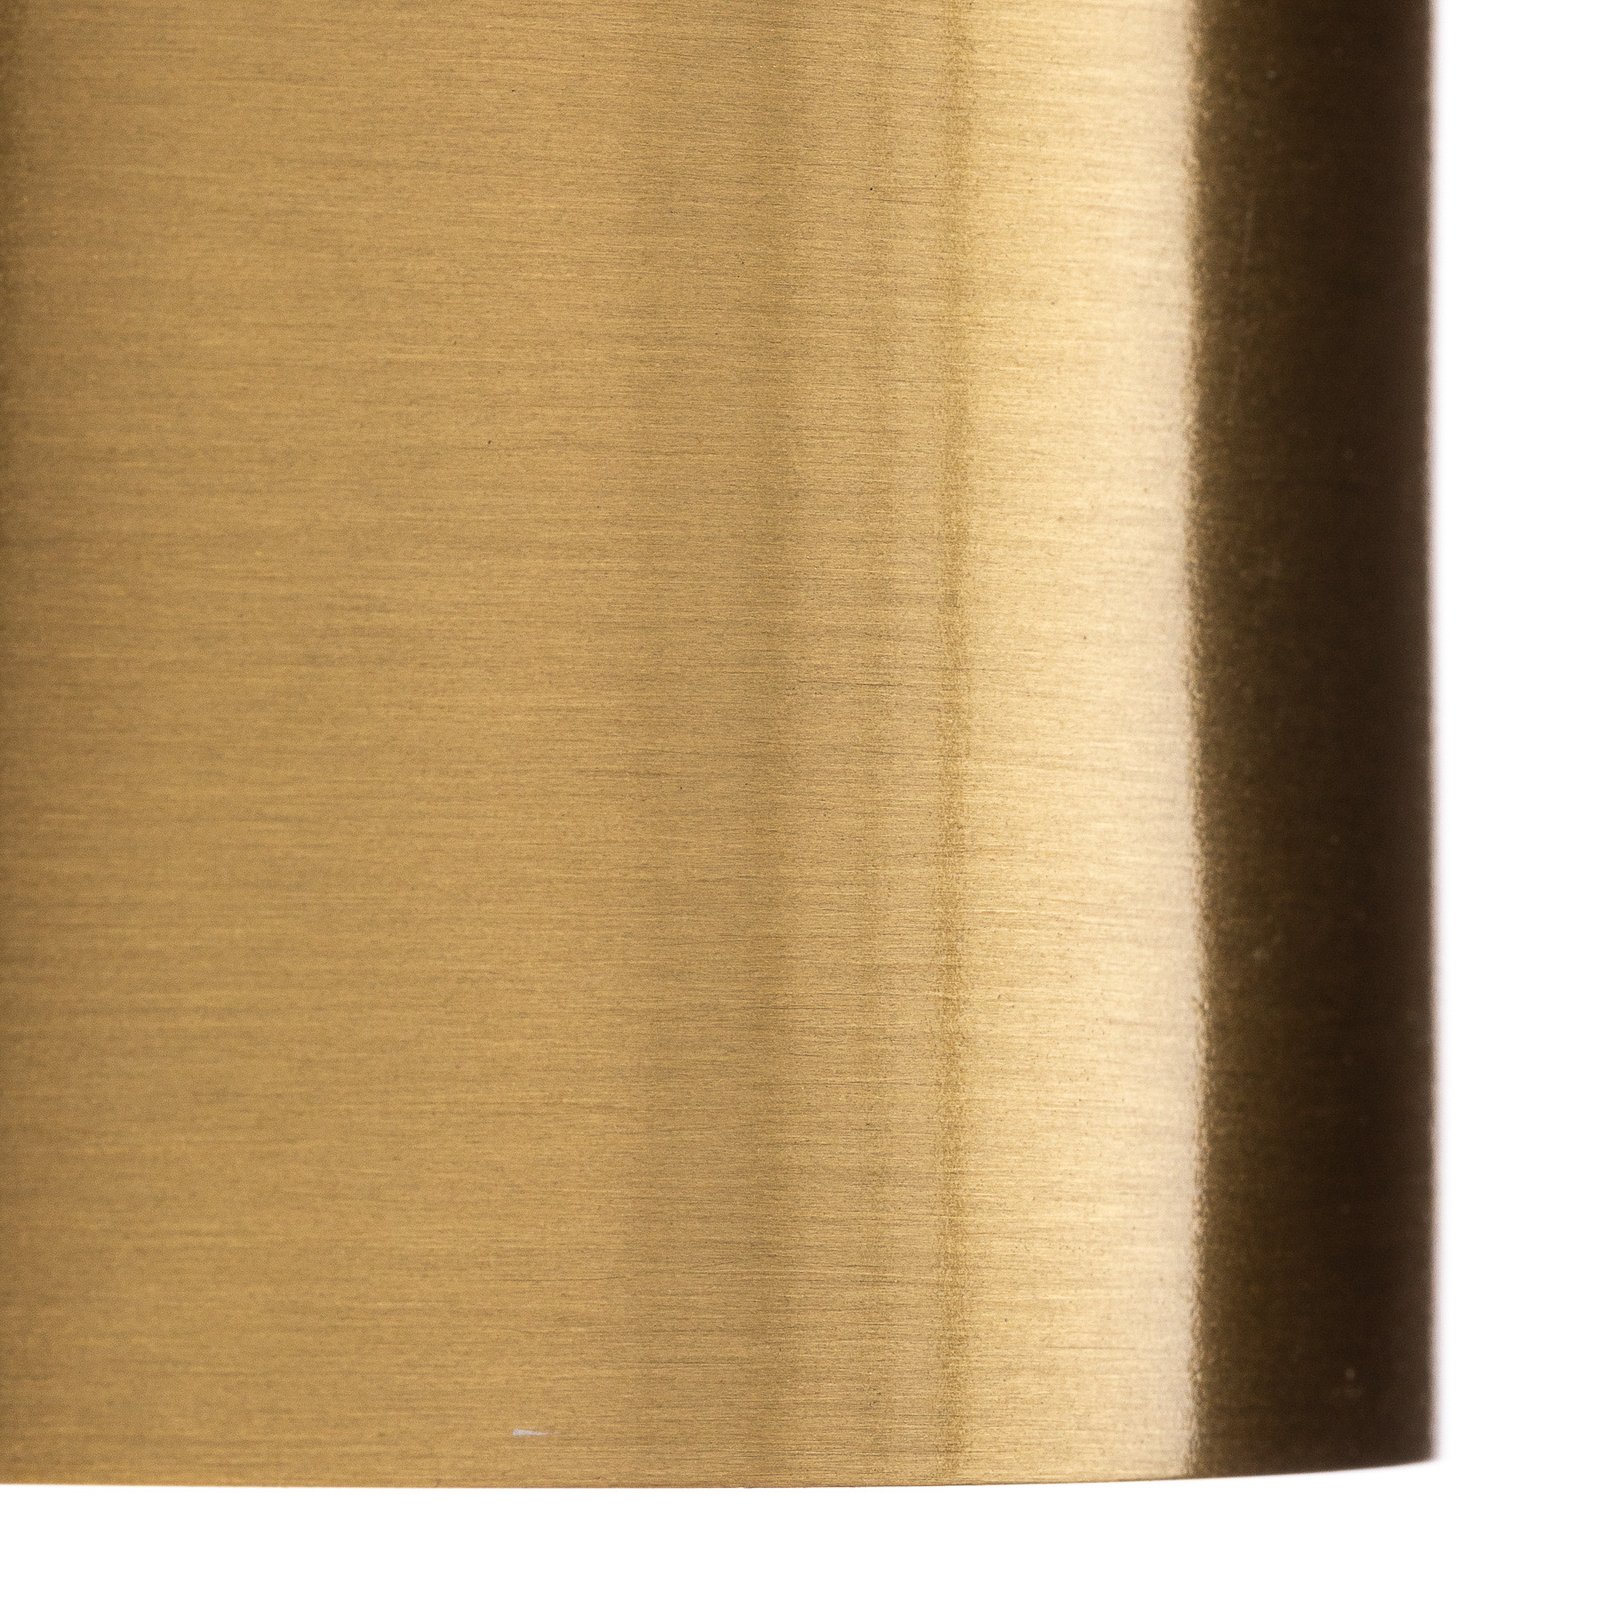 Lindby LED spot Nivoria, 11 x 6,5 cm, goudkleurig, set van 4